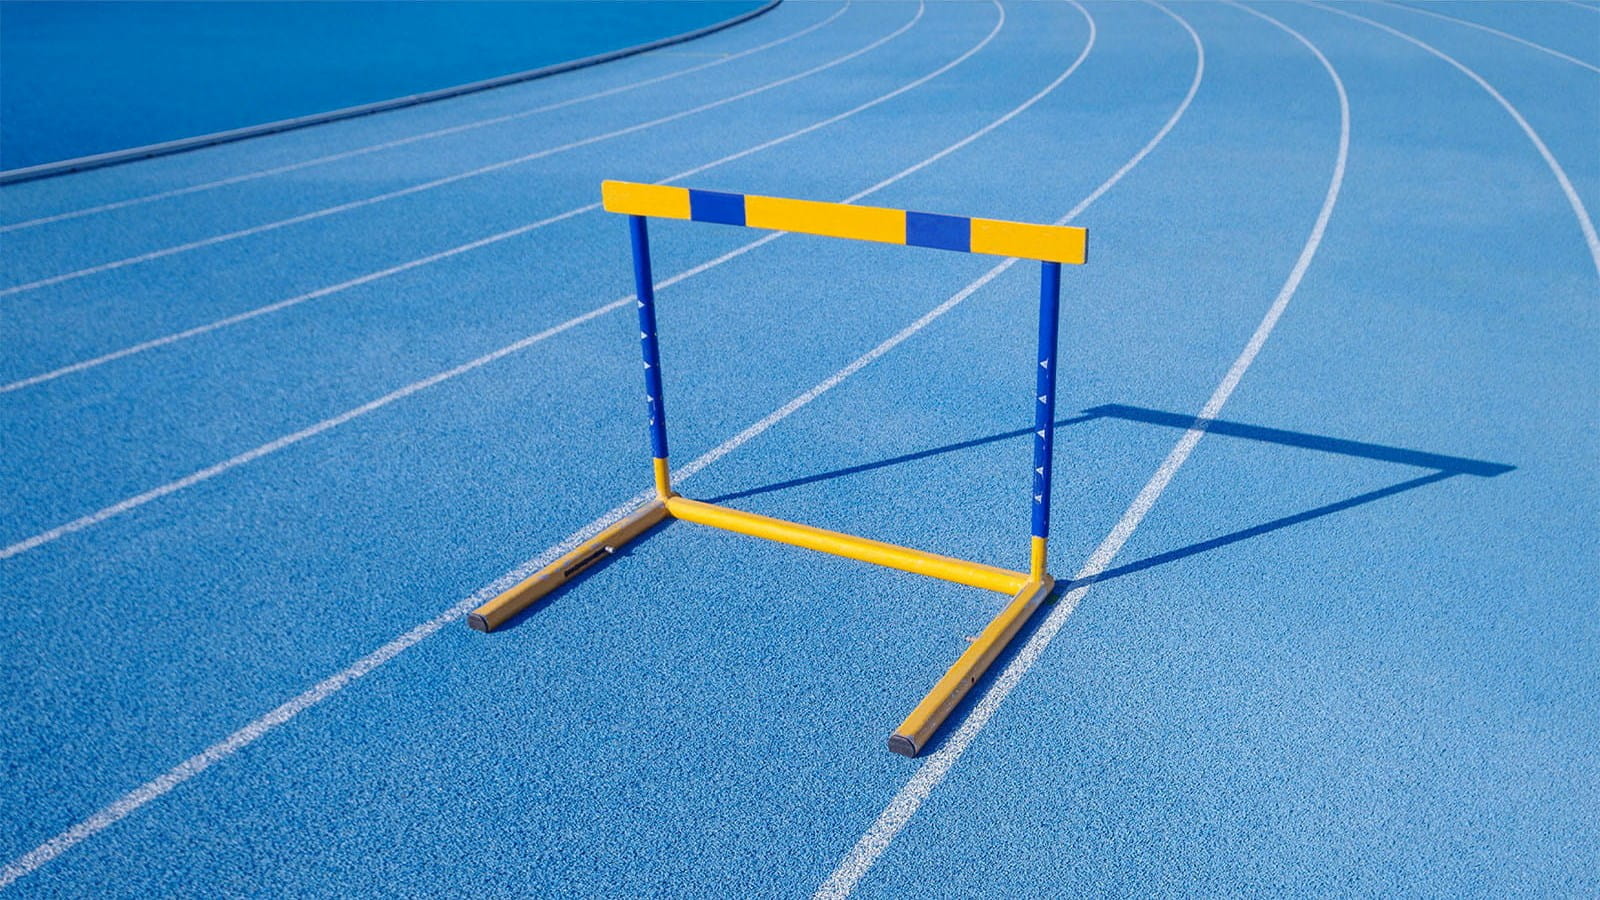 hurdle running track blue yellow ICAEW Audit & Beyond scepticism judgement